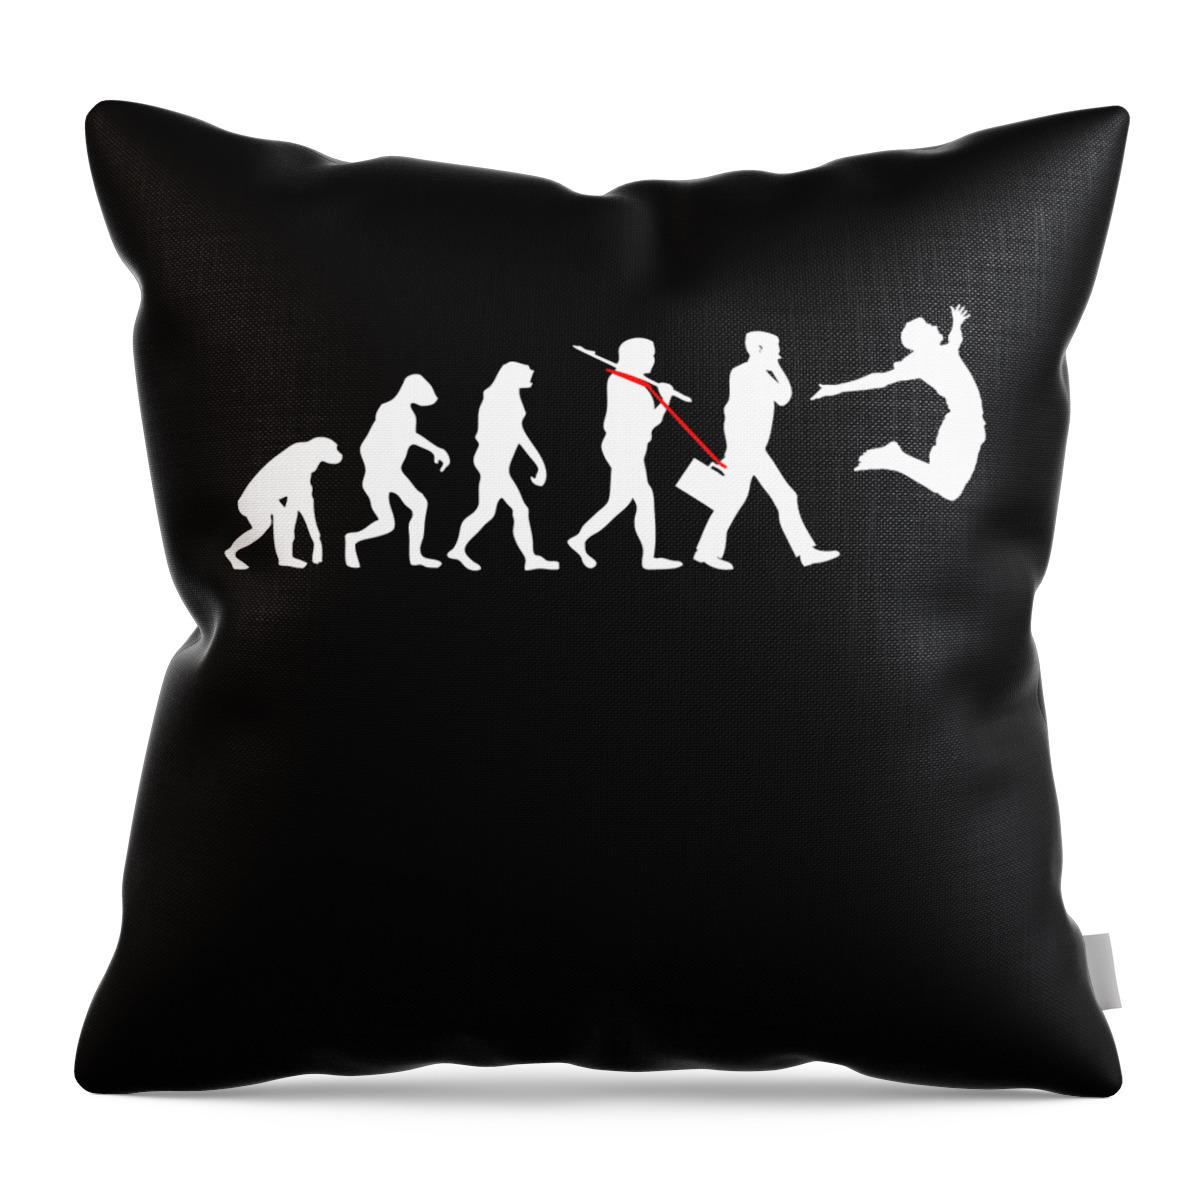 Cool Throw Pillow featuring the digital art Black Exit Break Free T Shirt by Flippin Sweet Gear